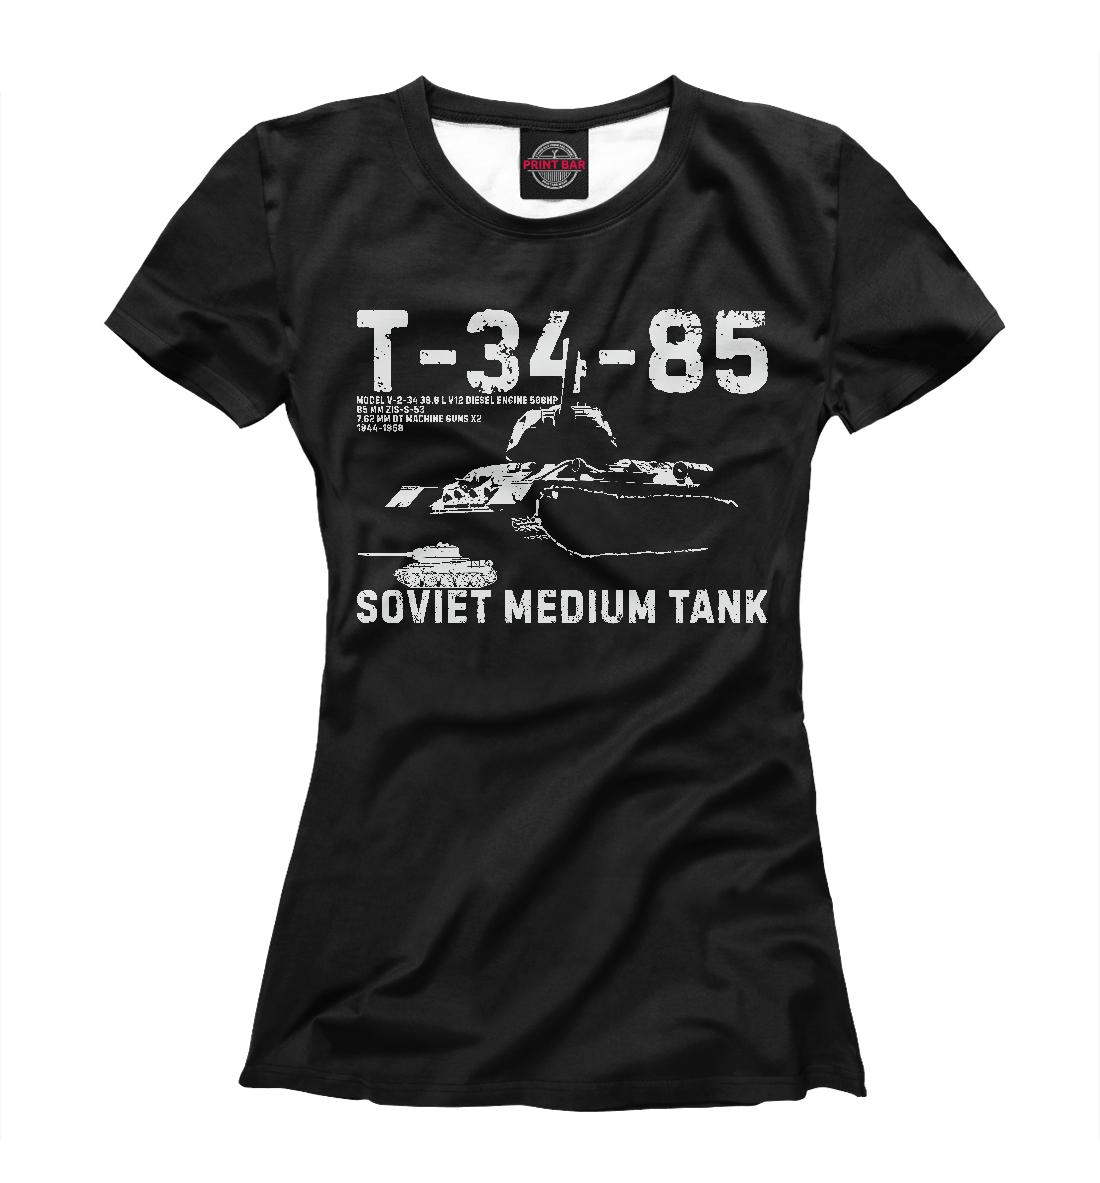 Футболка Т-34-85 советский танк для девочек, артикул: TNK-419312-fut-1mp